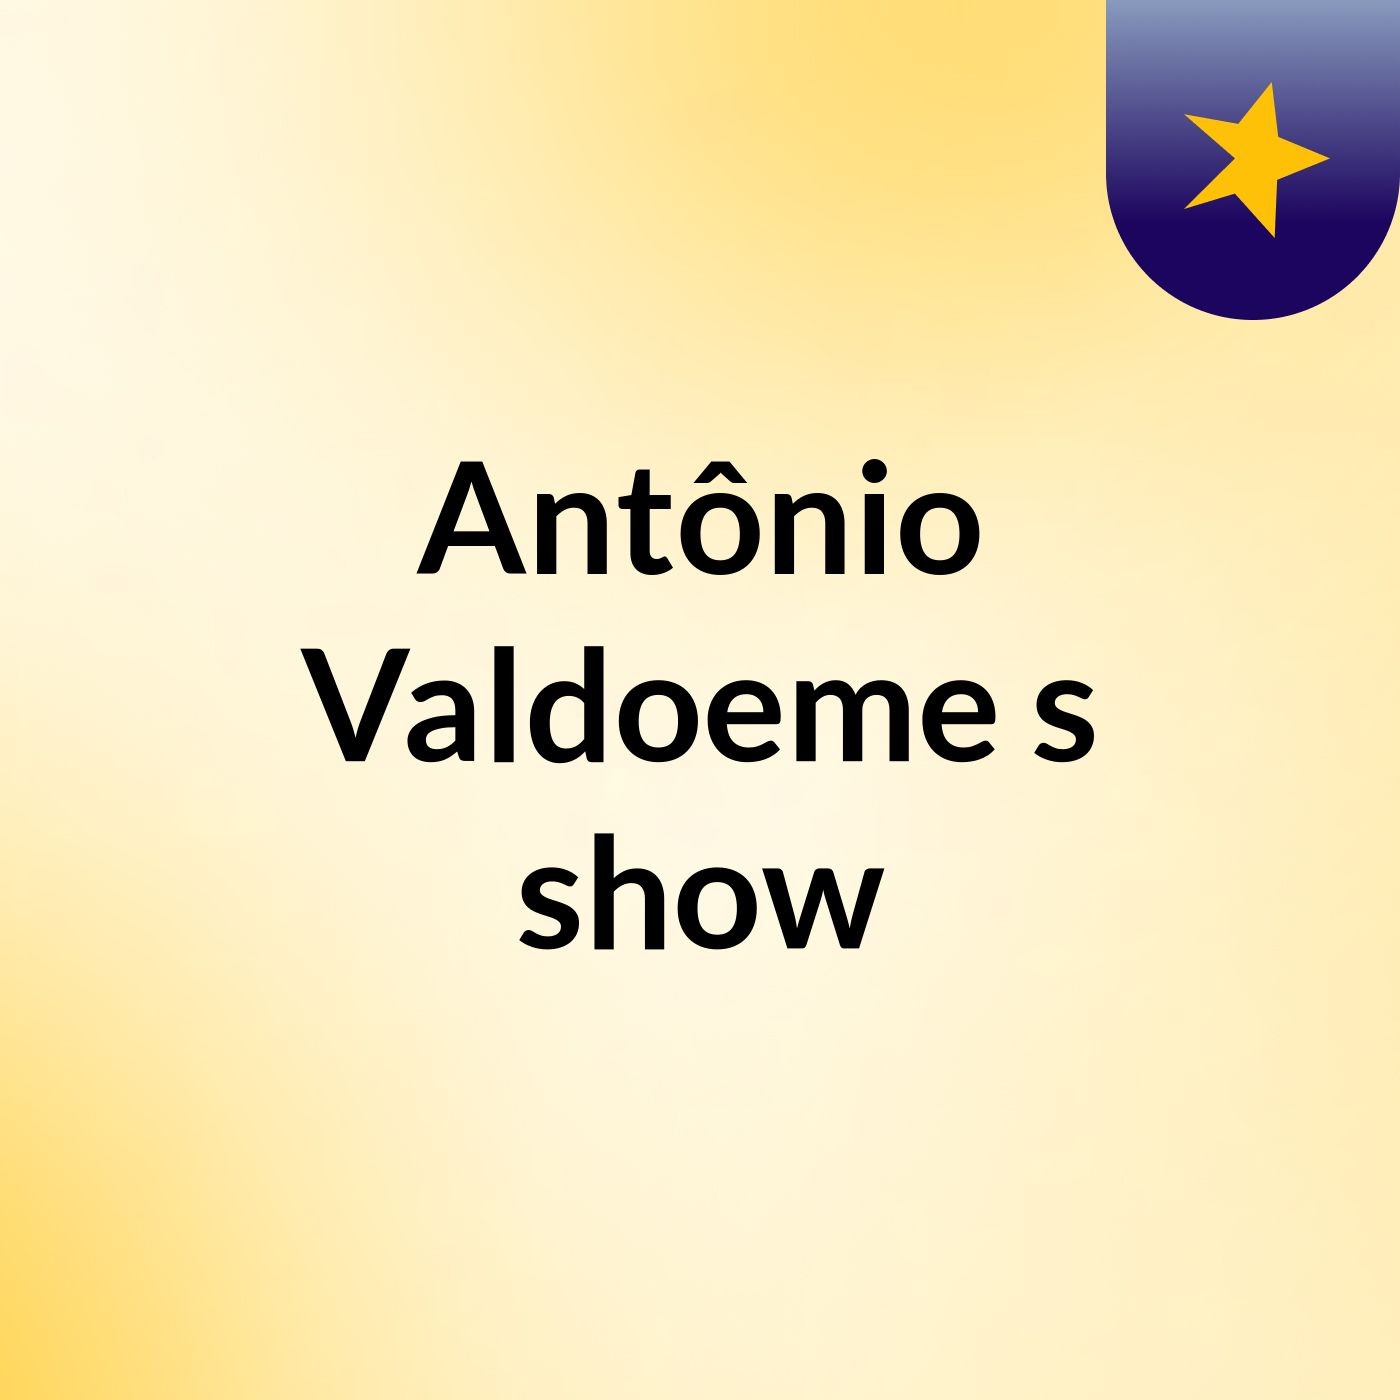 Episódio 3 - Antônio Valdoeme's show